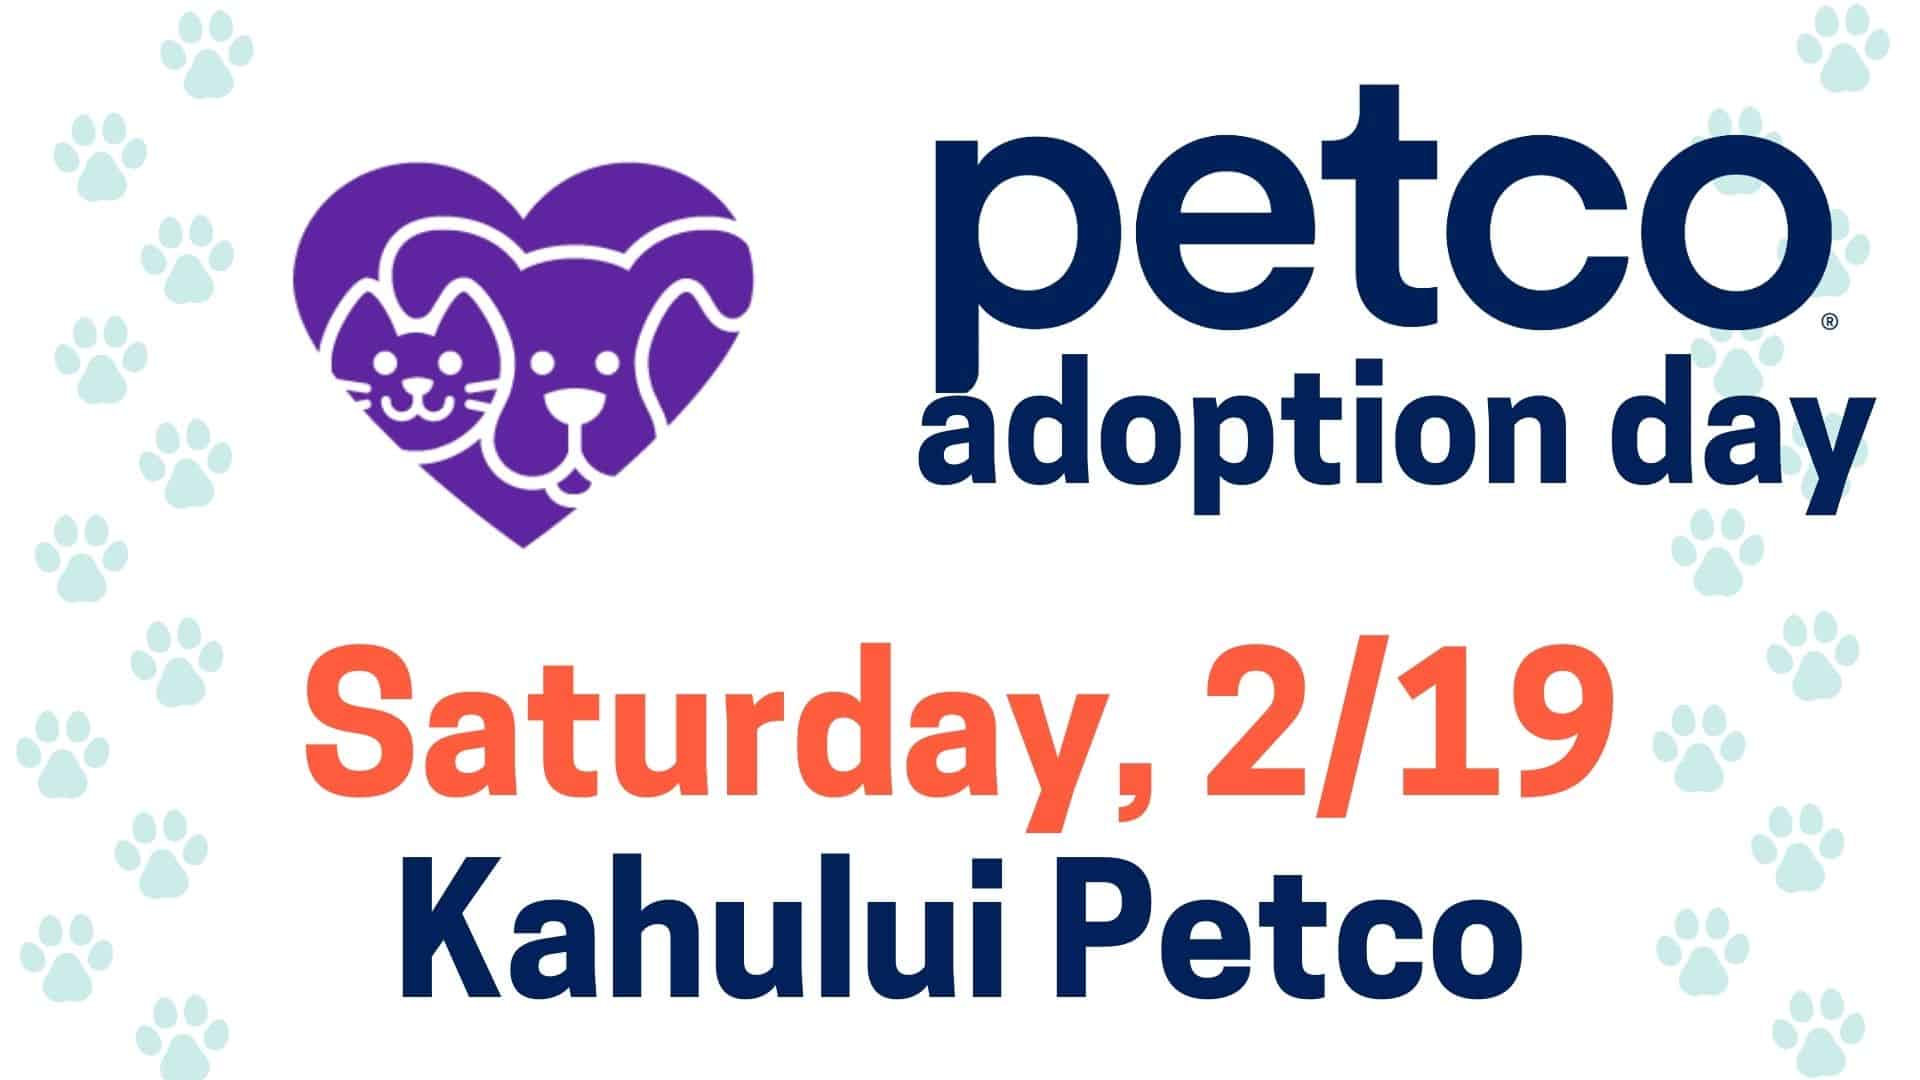 Petco Adoption Day - Saturday 2/19